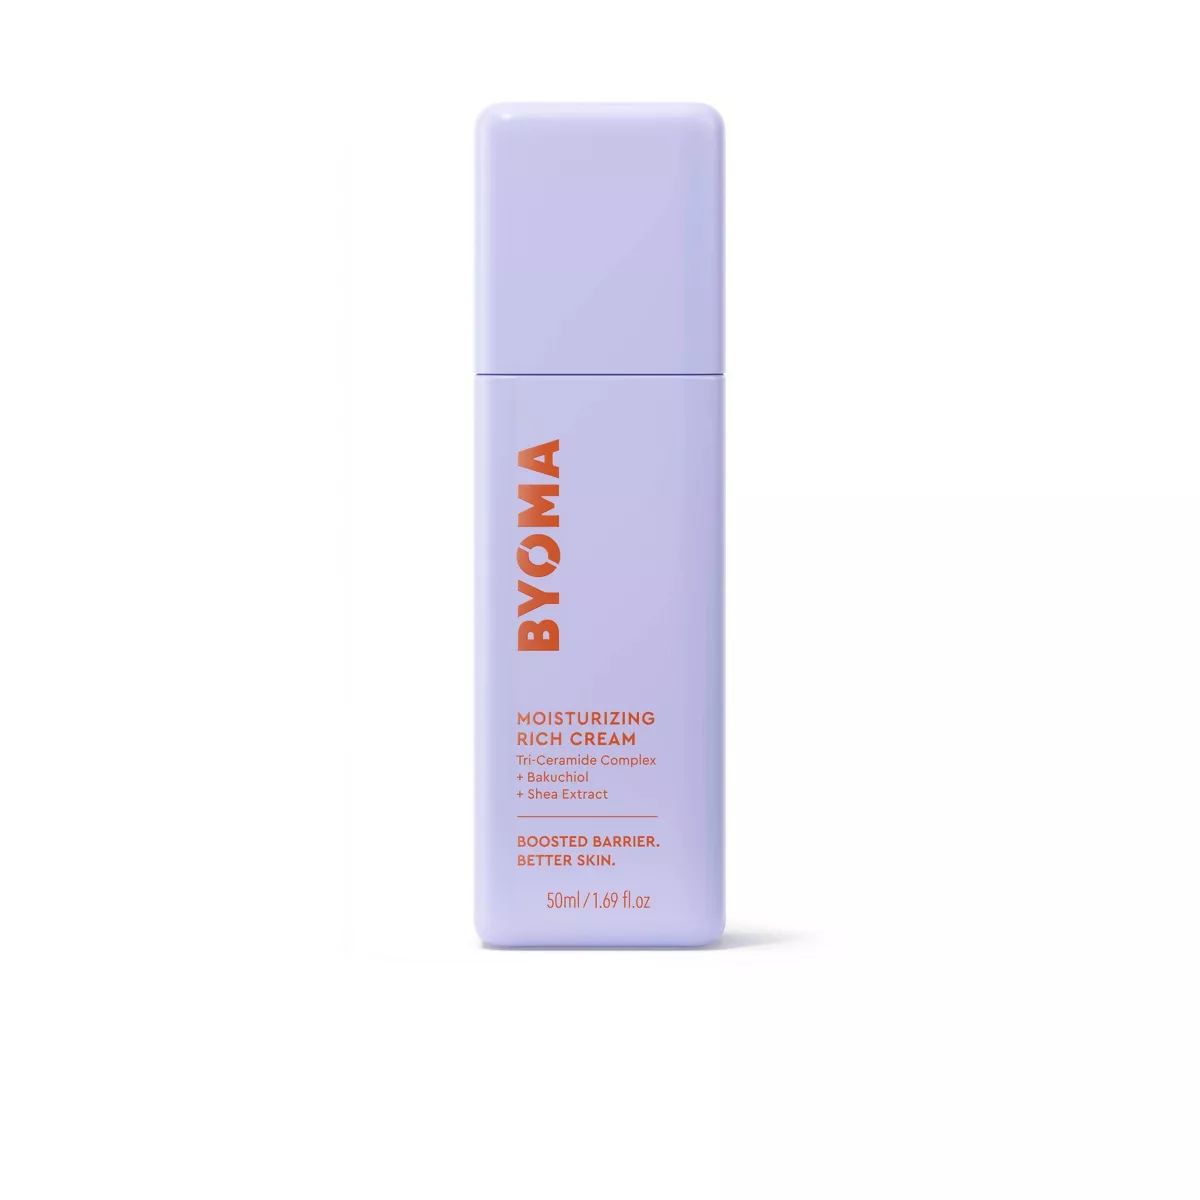 BYOMA Moisturizing Rich Cream - 1.69 fl oz | Target